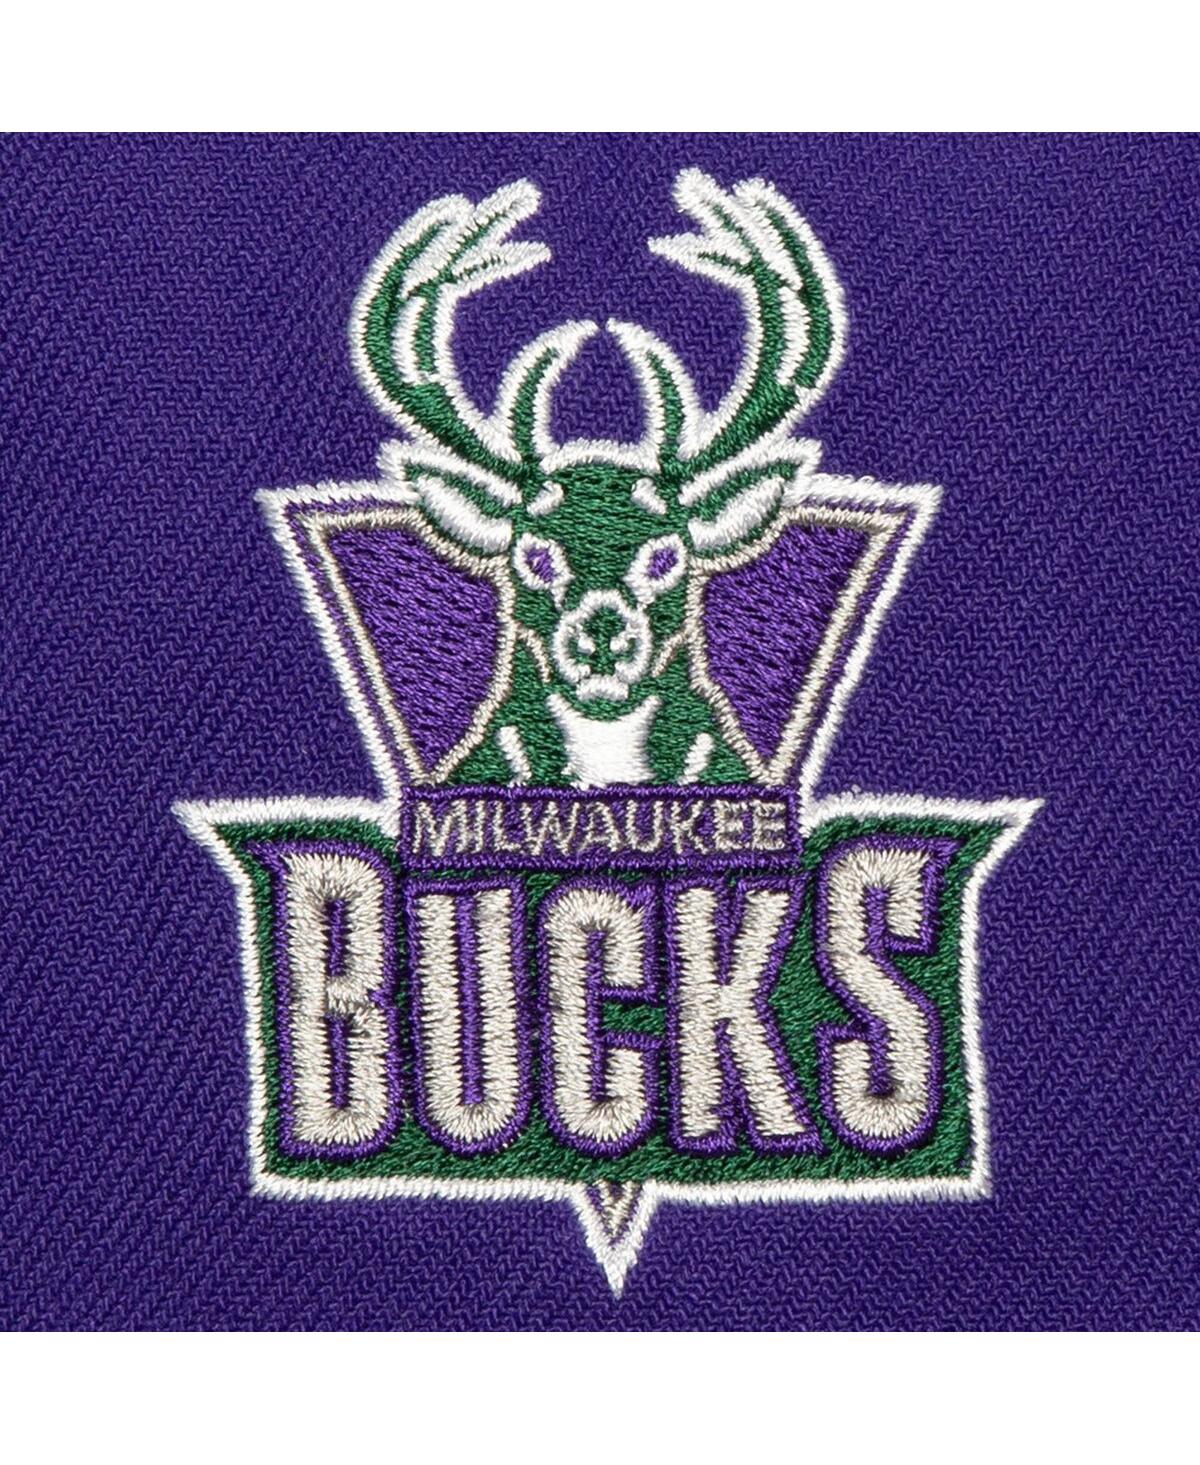 Shop Mitchell & Ness Men's  White, Purple Milwaukee Bucks Retro Sport Colorblock Script Snapback Hat In White,purple